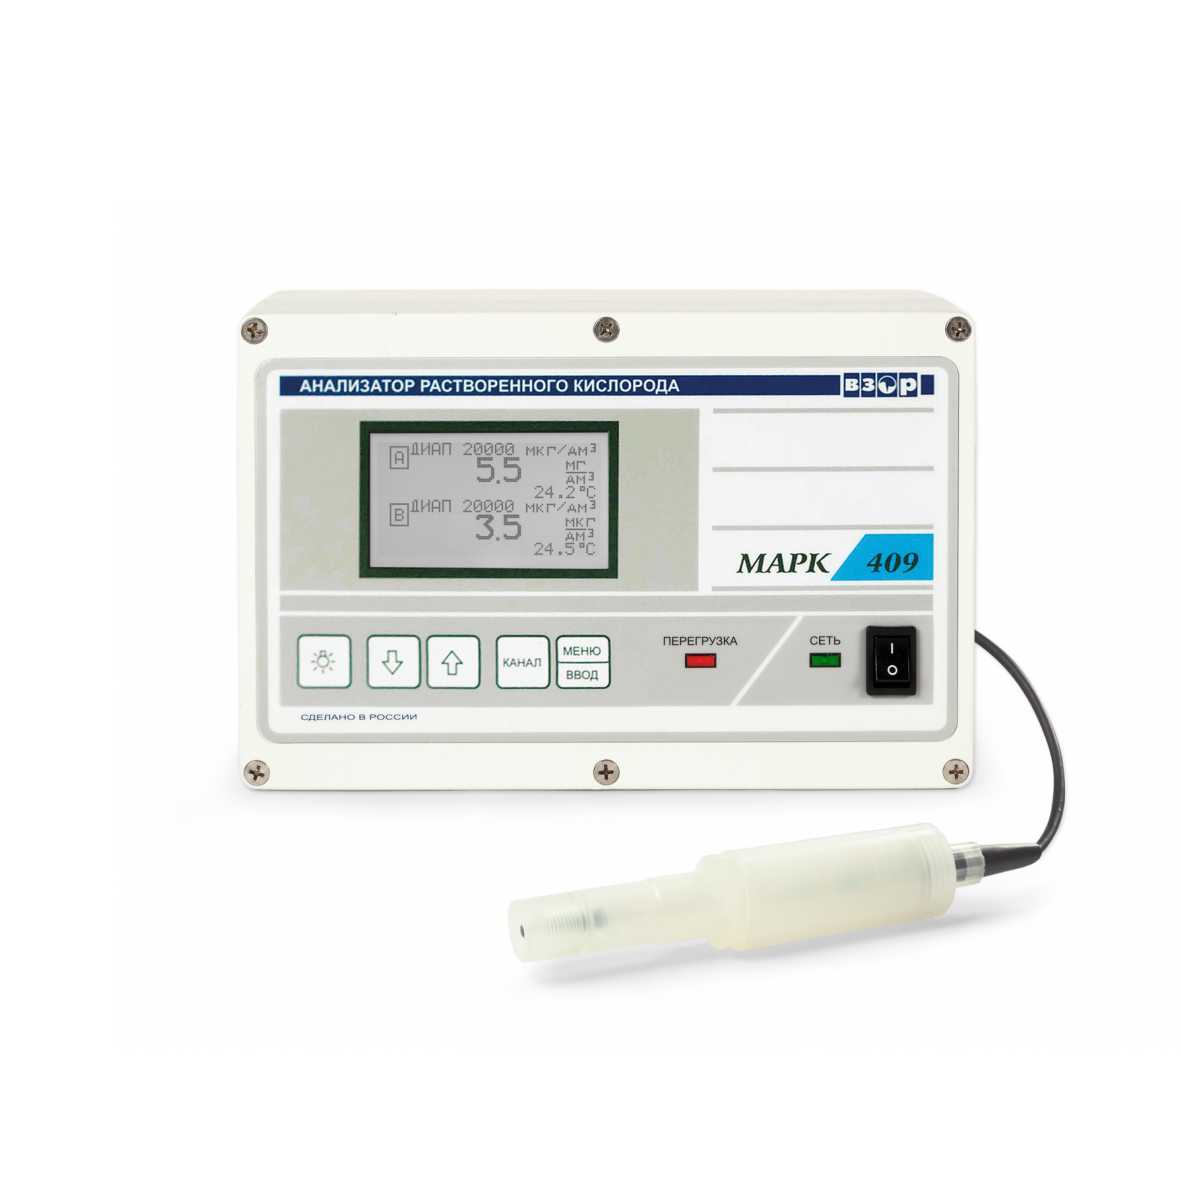 МАРК-409 Анализатор растворенного кислорода